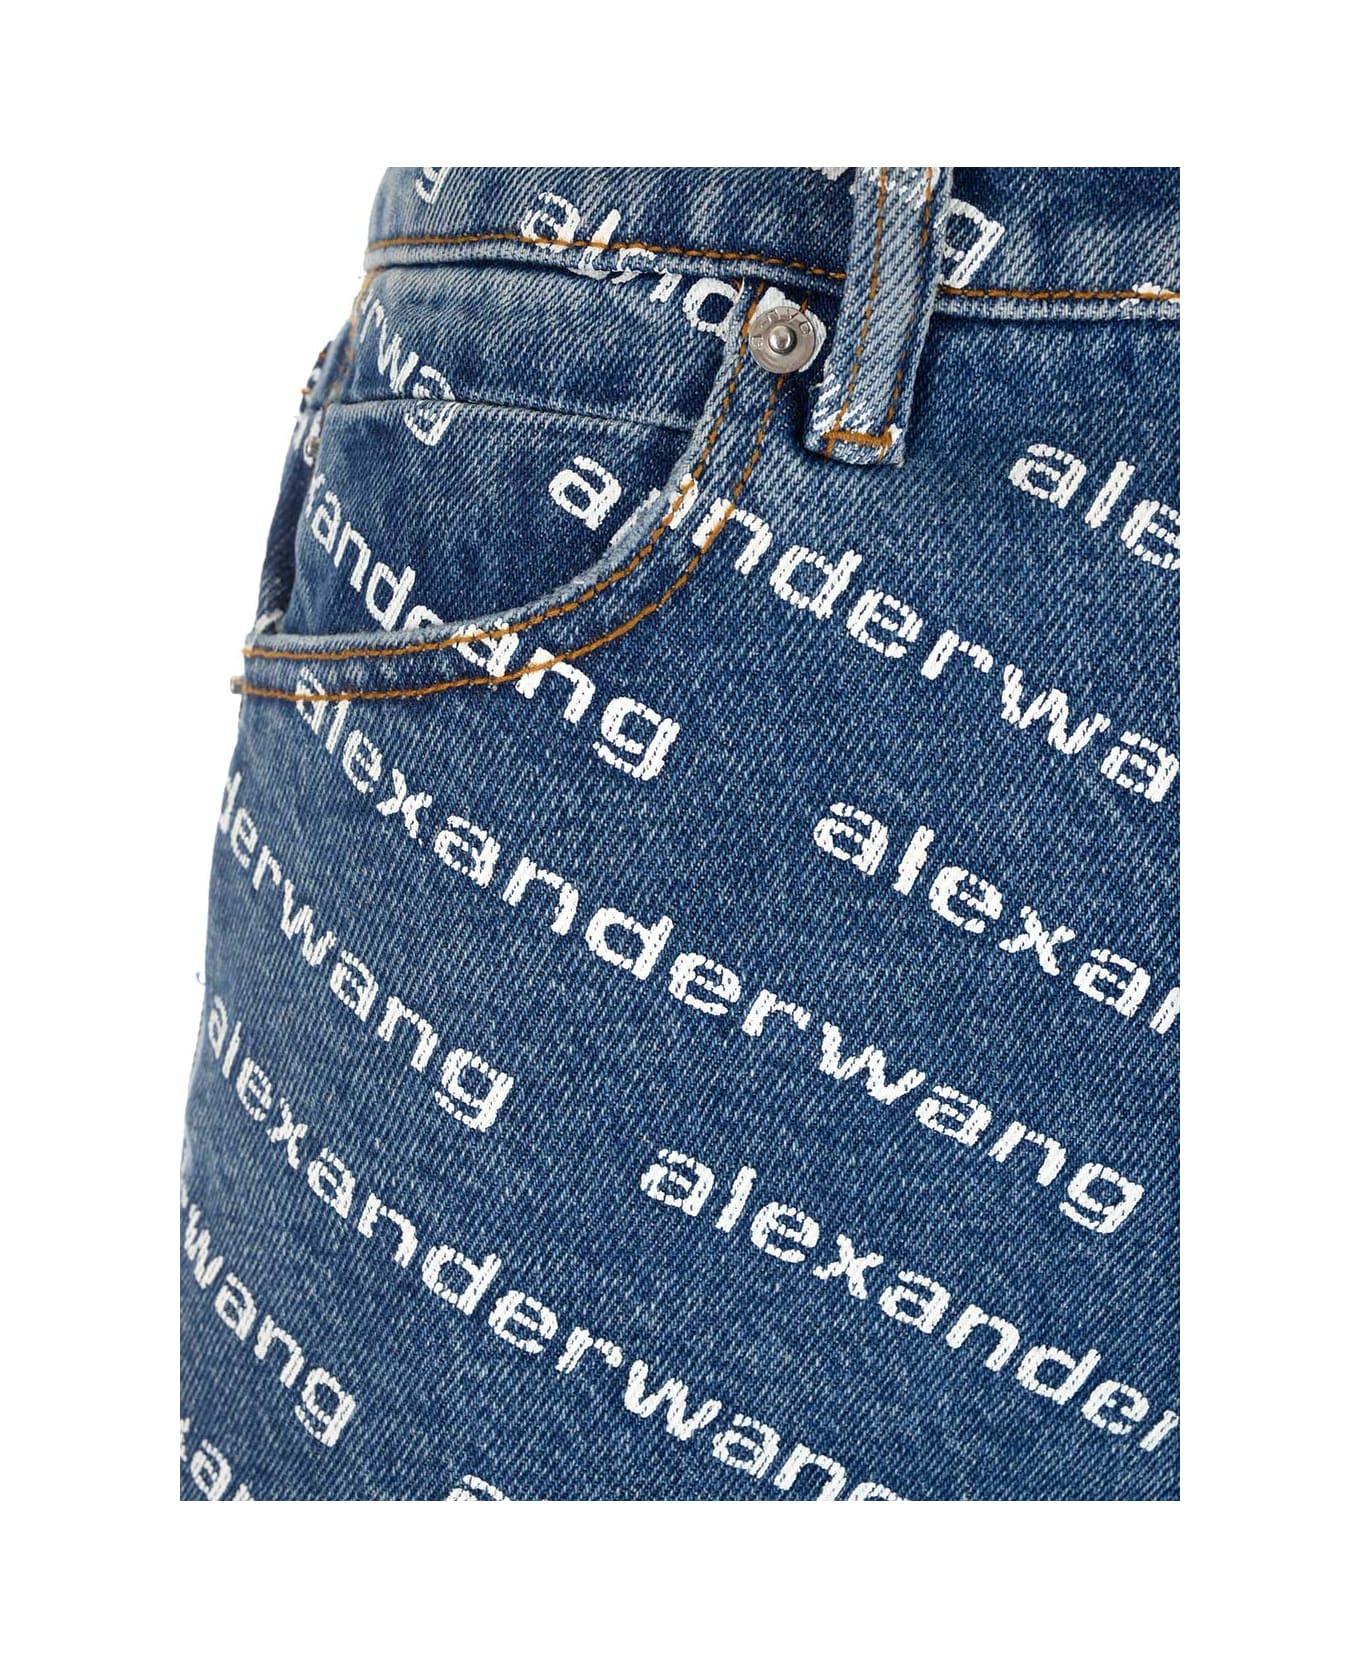 Alexander Wang 'bite' High-rise Shorts - BLUE/WHITE